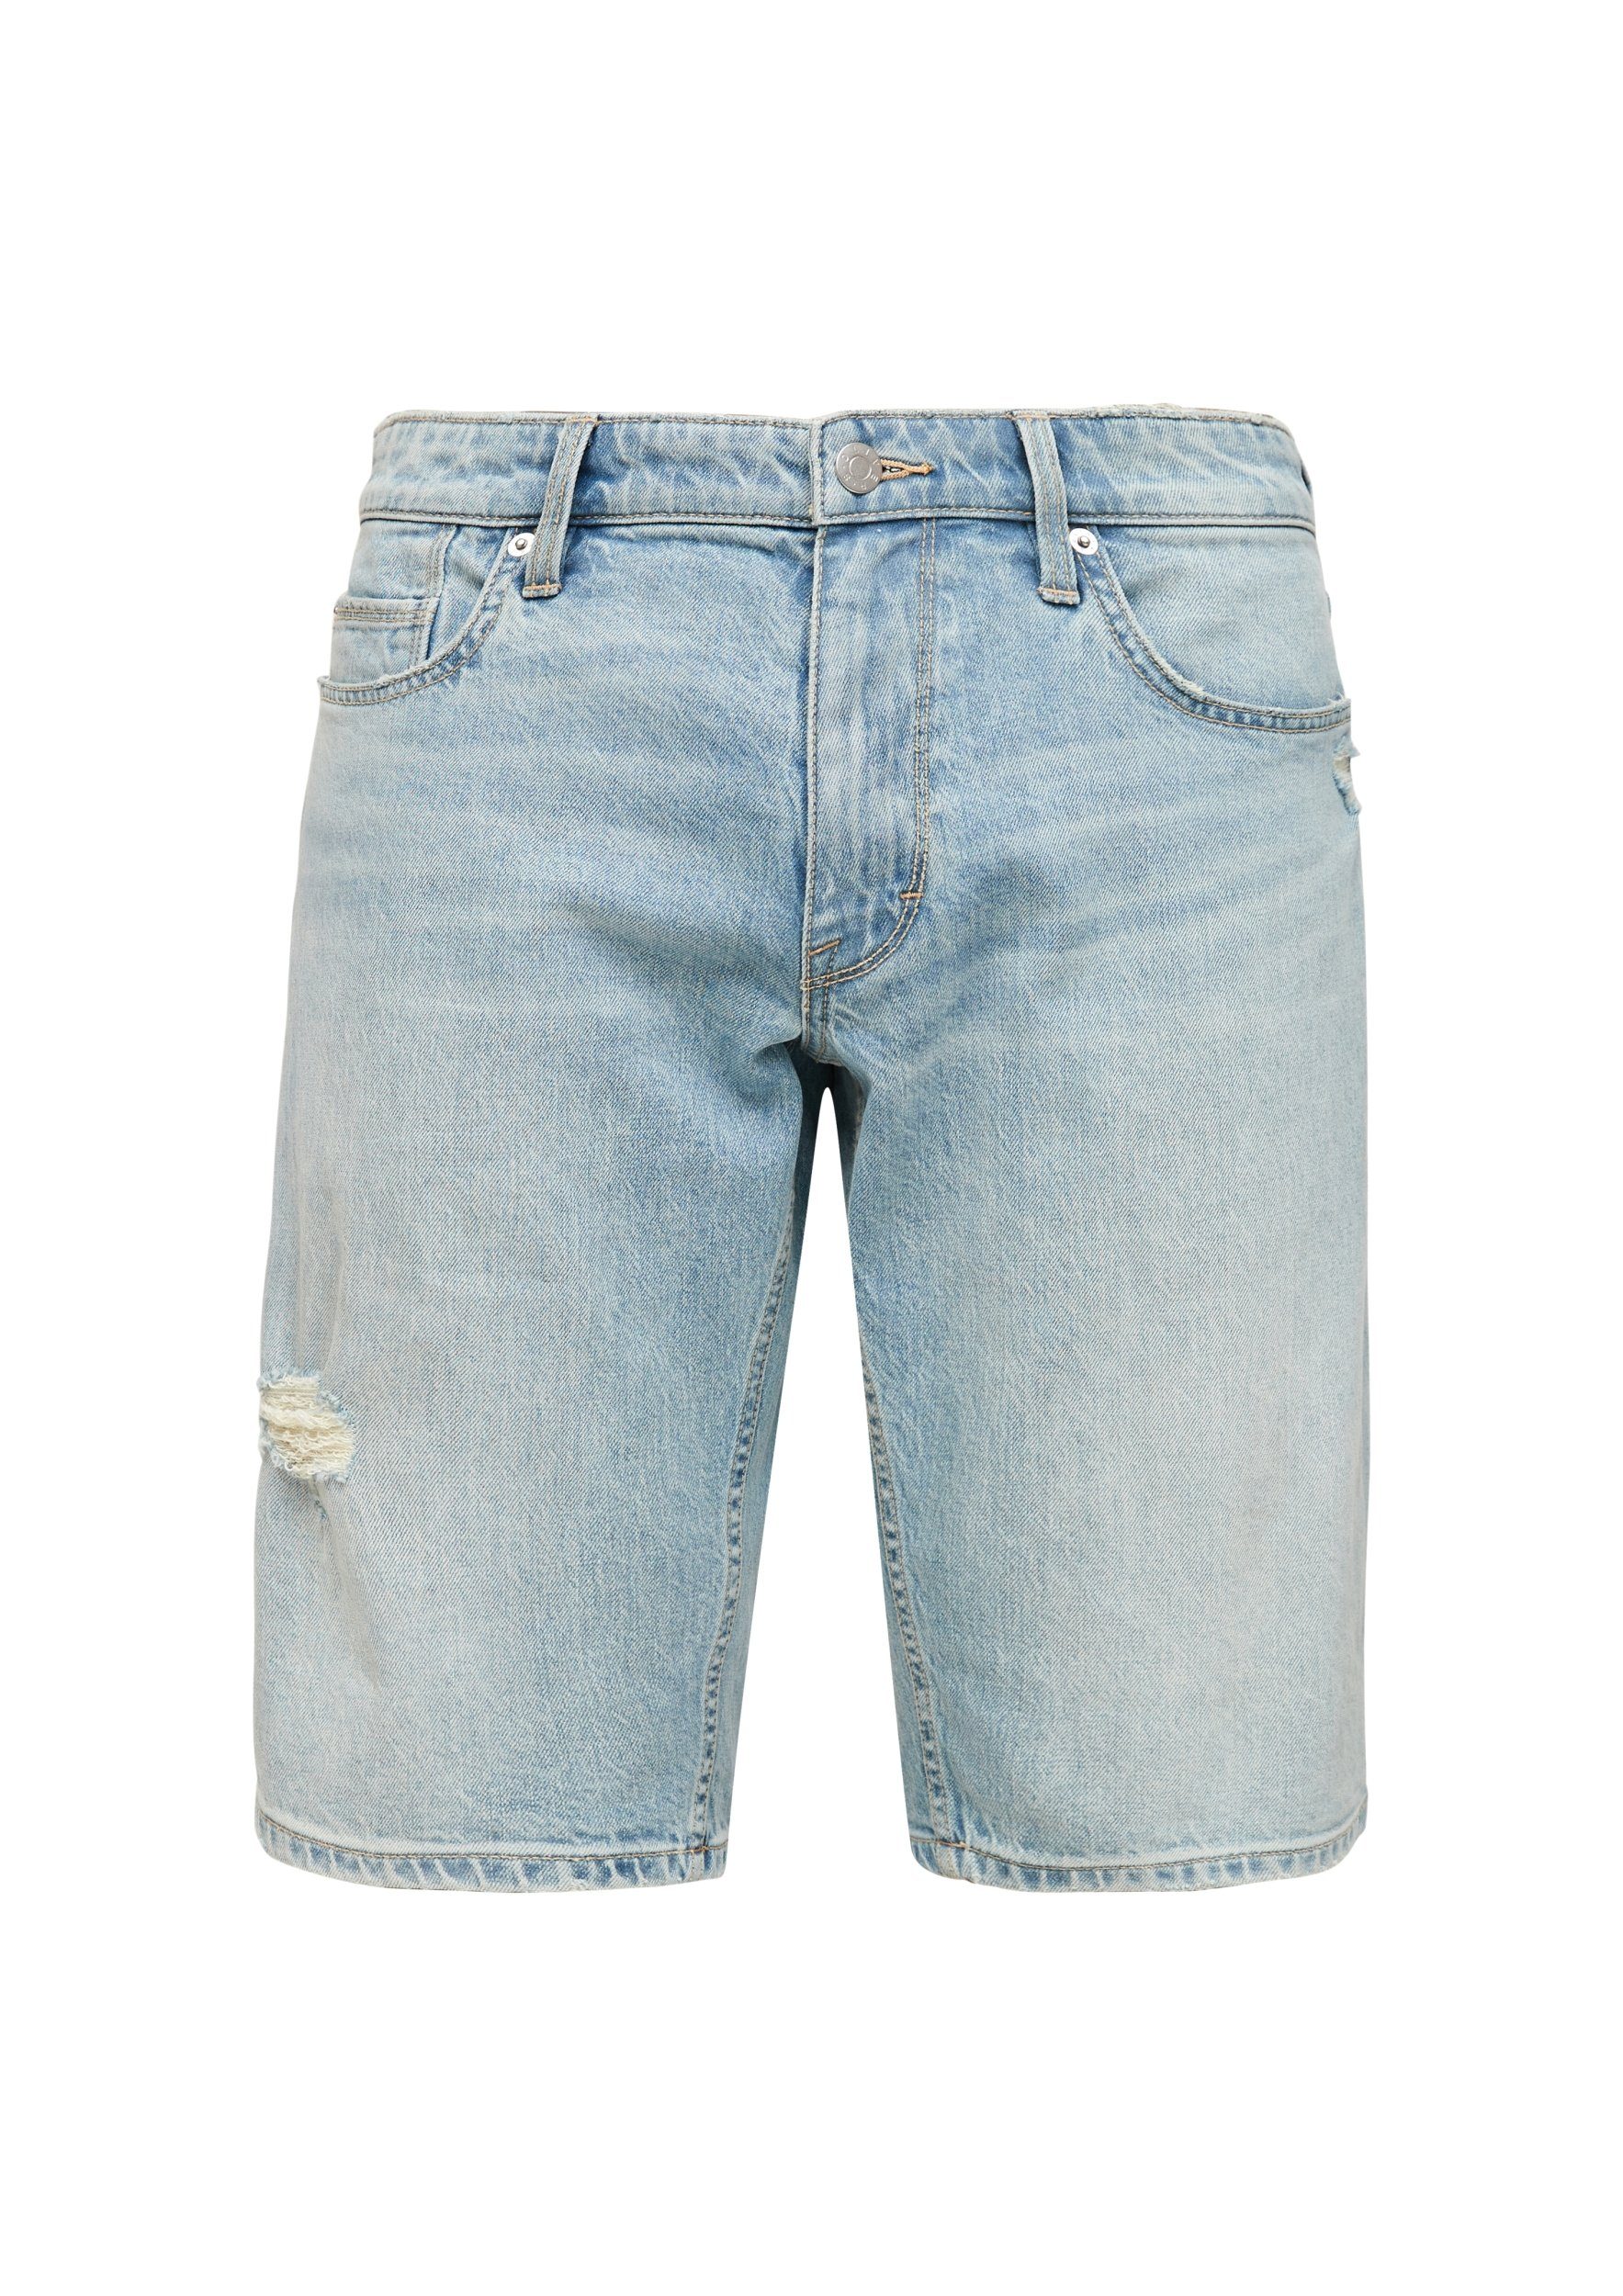 s.Oliver Bermudas Jeans-Bermuda